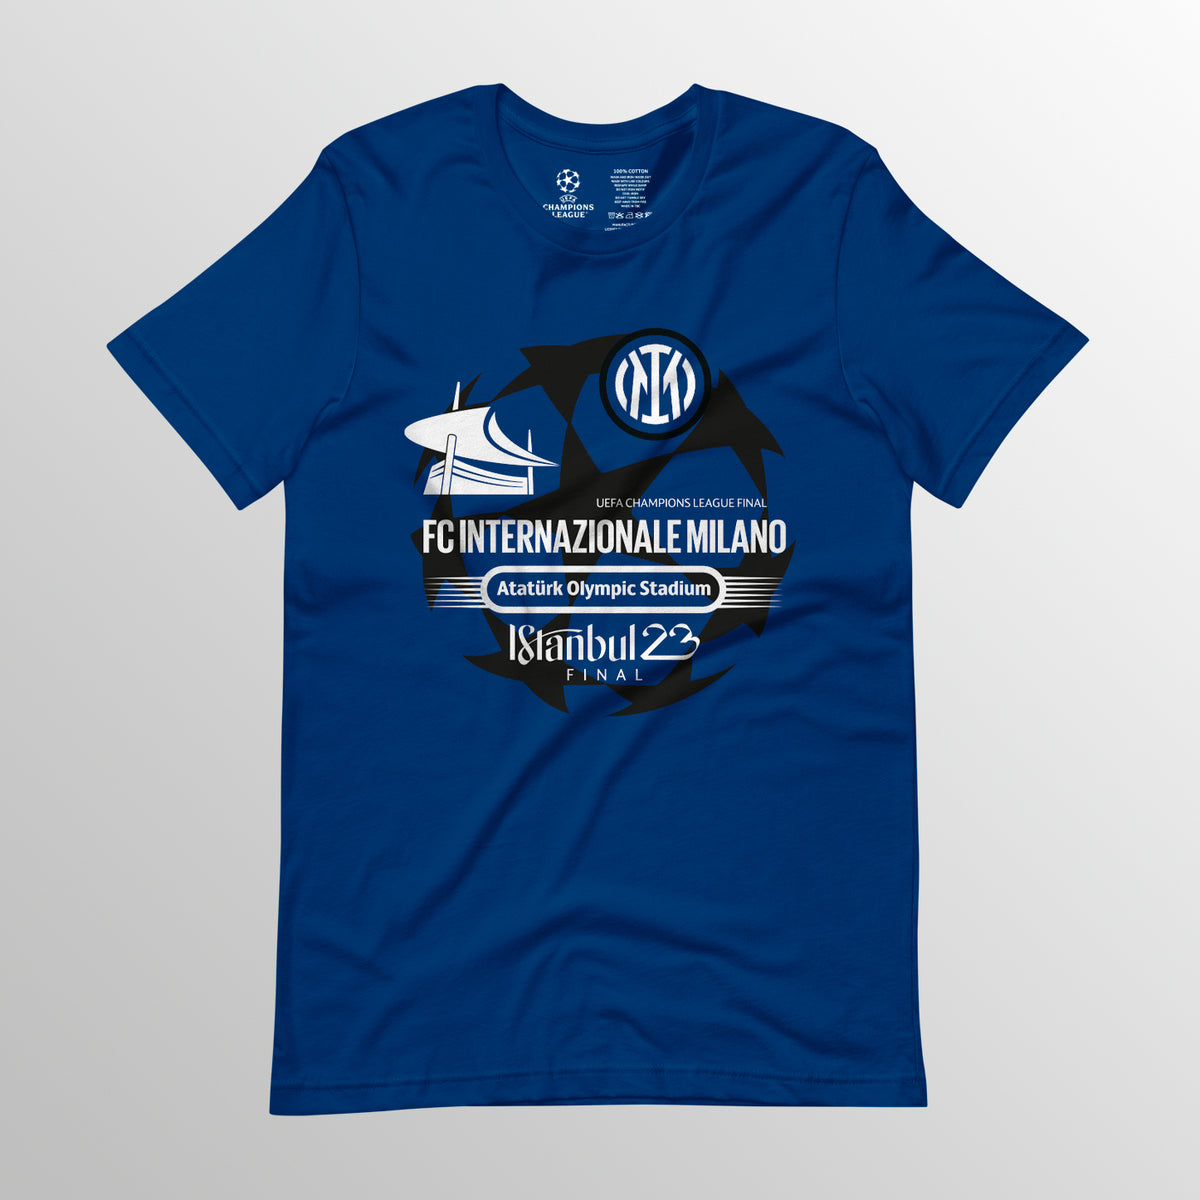 Camiseta de Starball de UCL 2023 Final Inter Milan